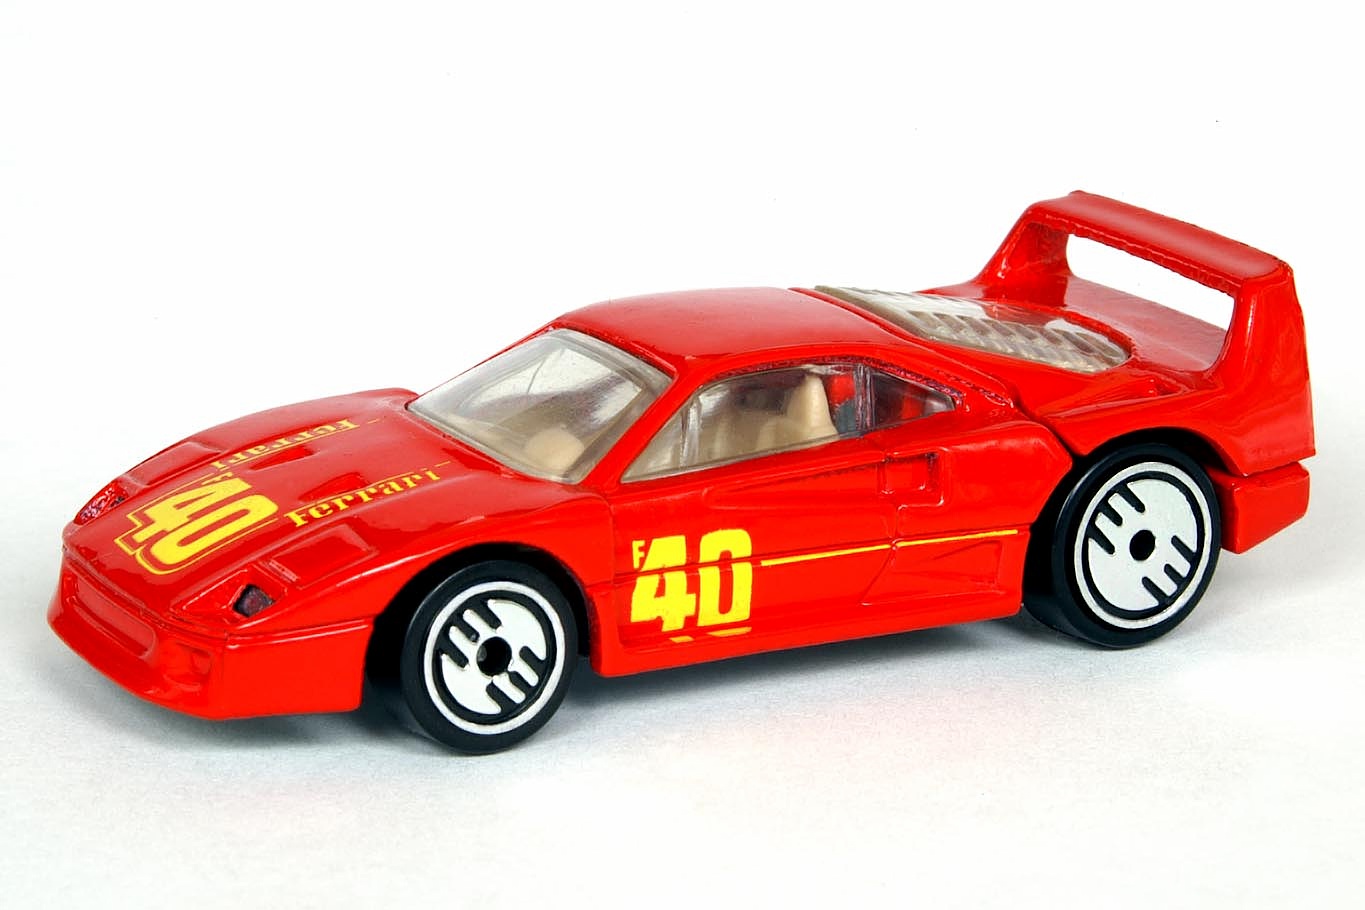 Ferrari F40 | Hot Wheels Wiki | Fandom